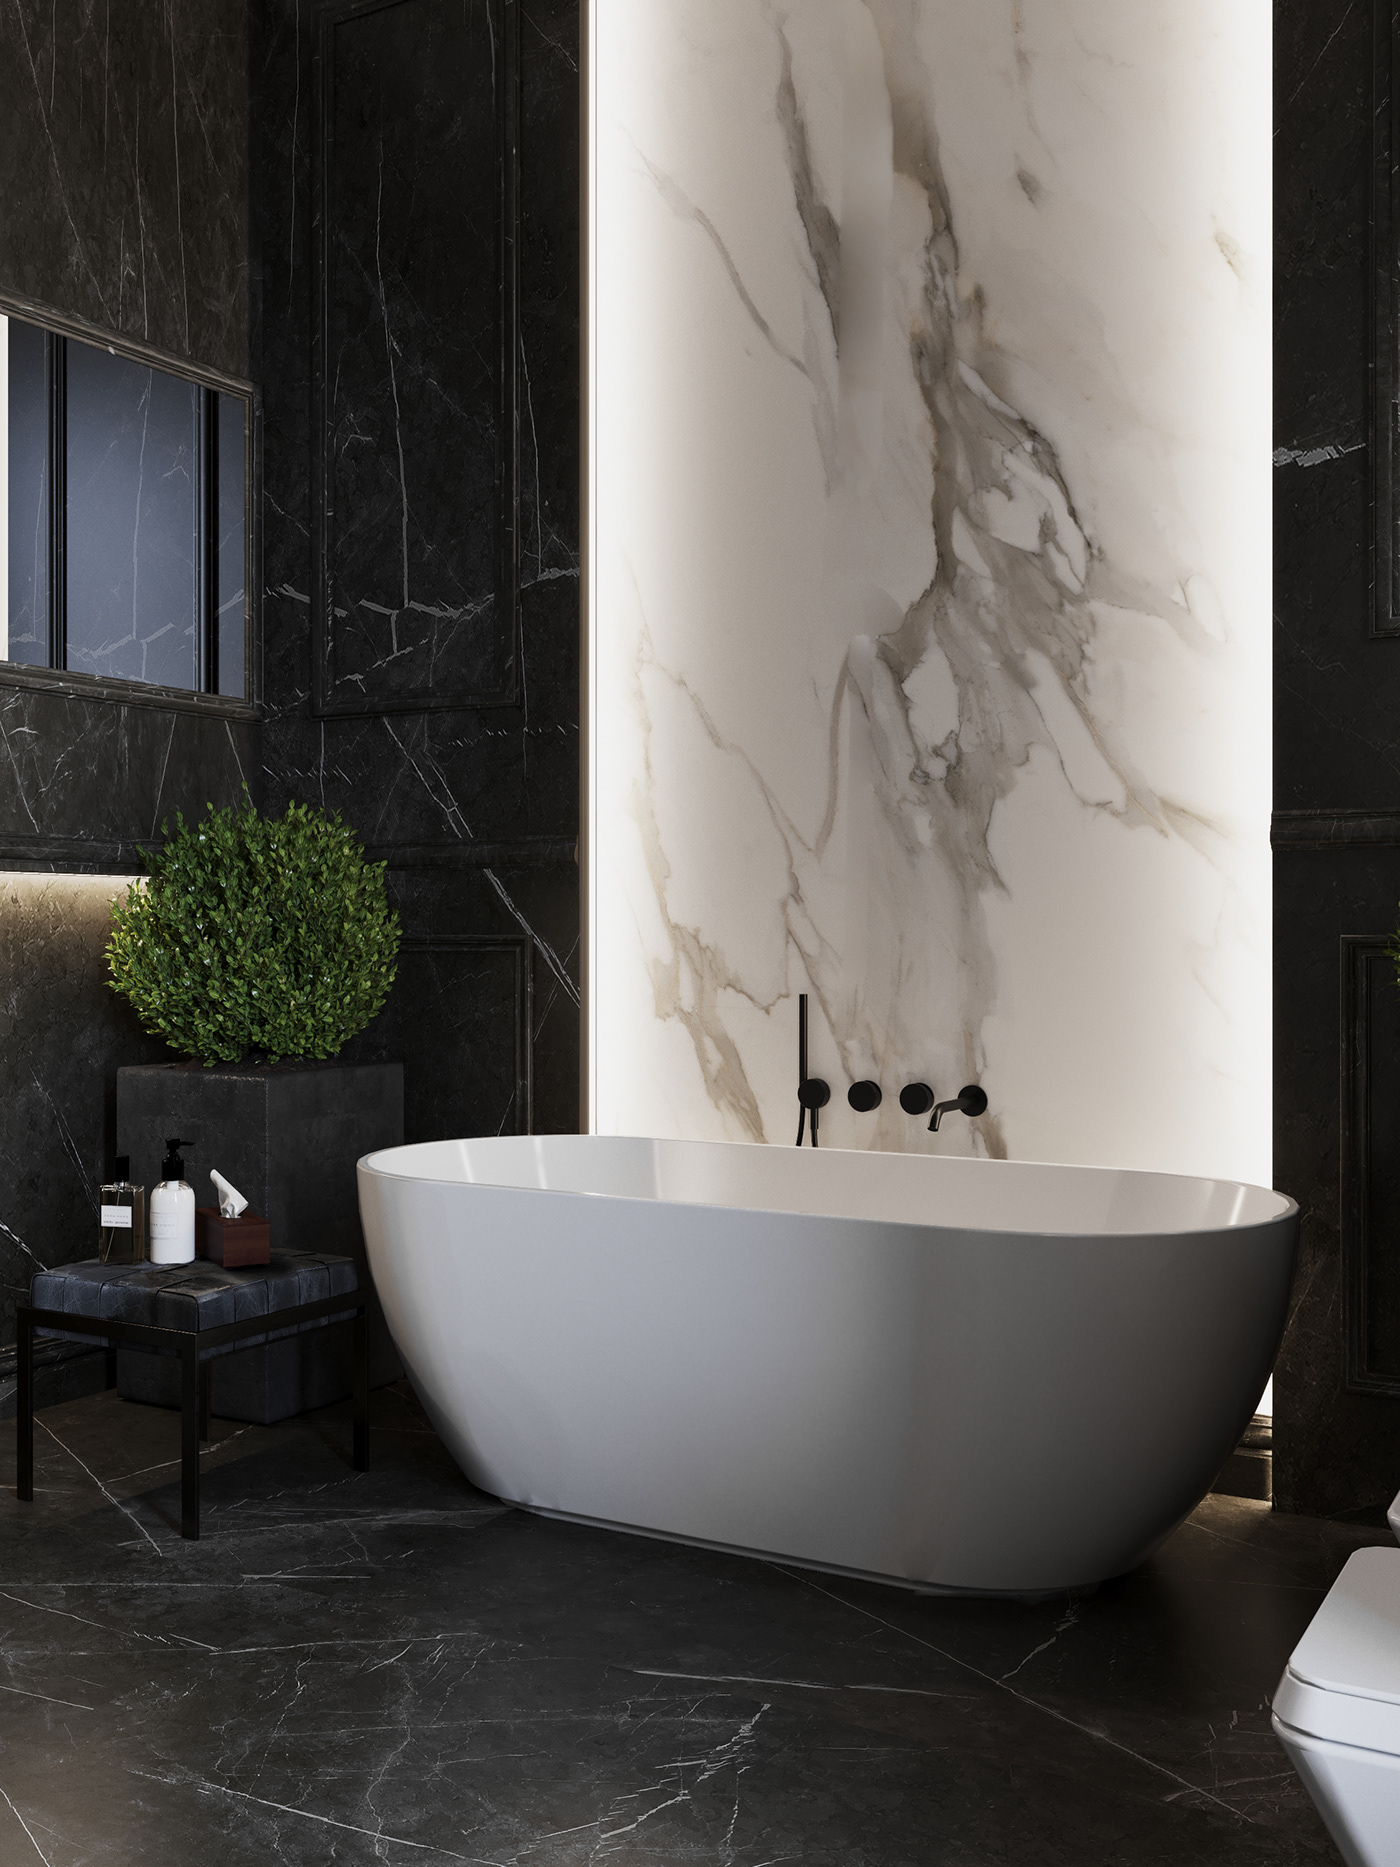 visualisation interiordesign Project apartment luxury Russia novosibirsk CGI Render corona